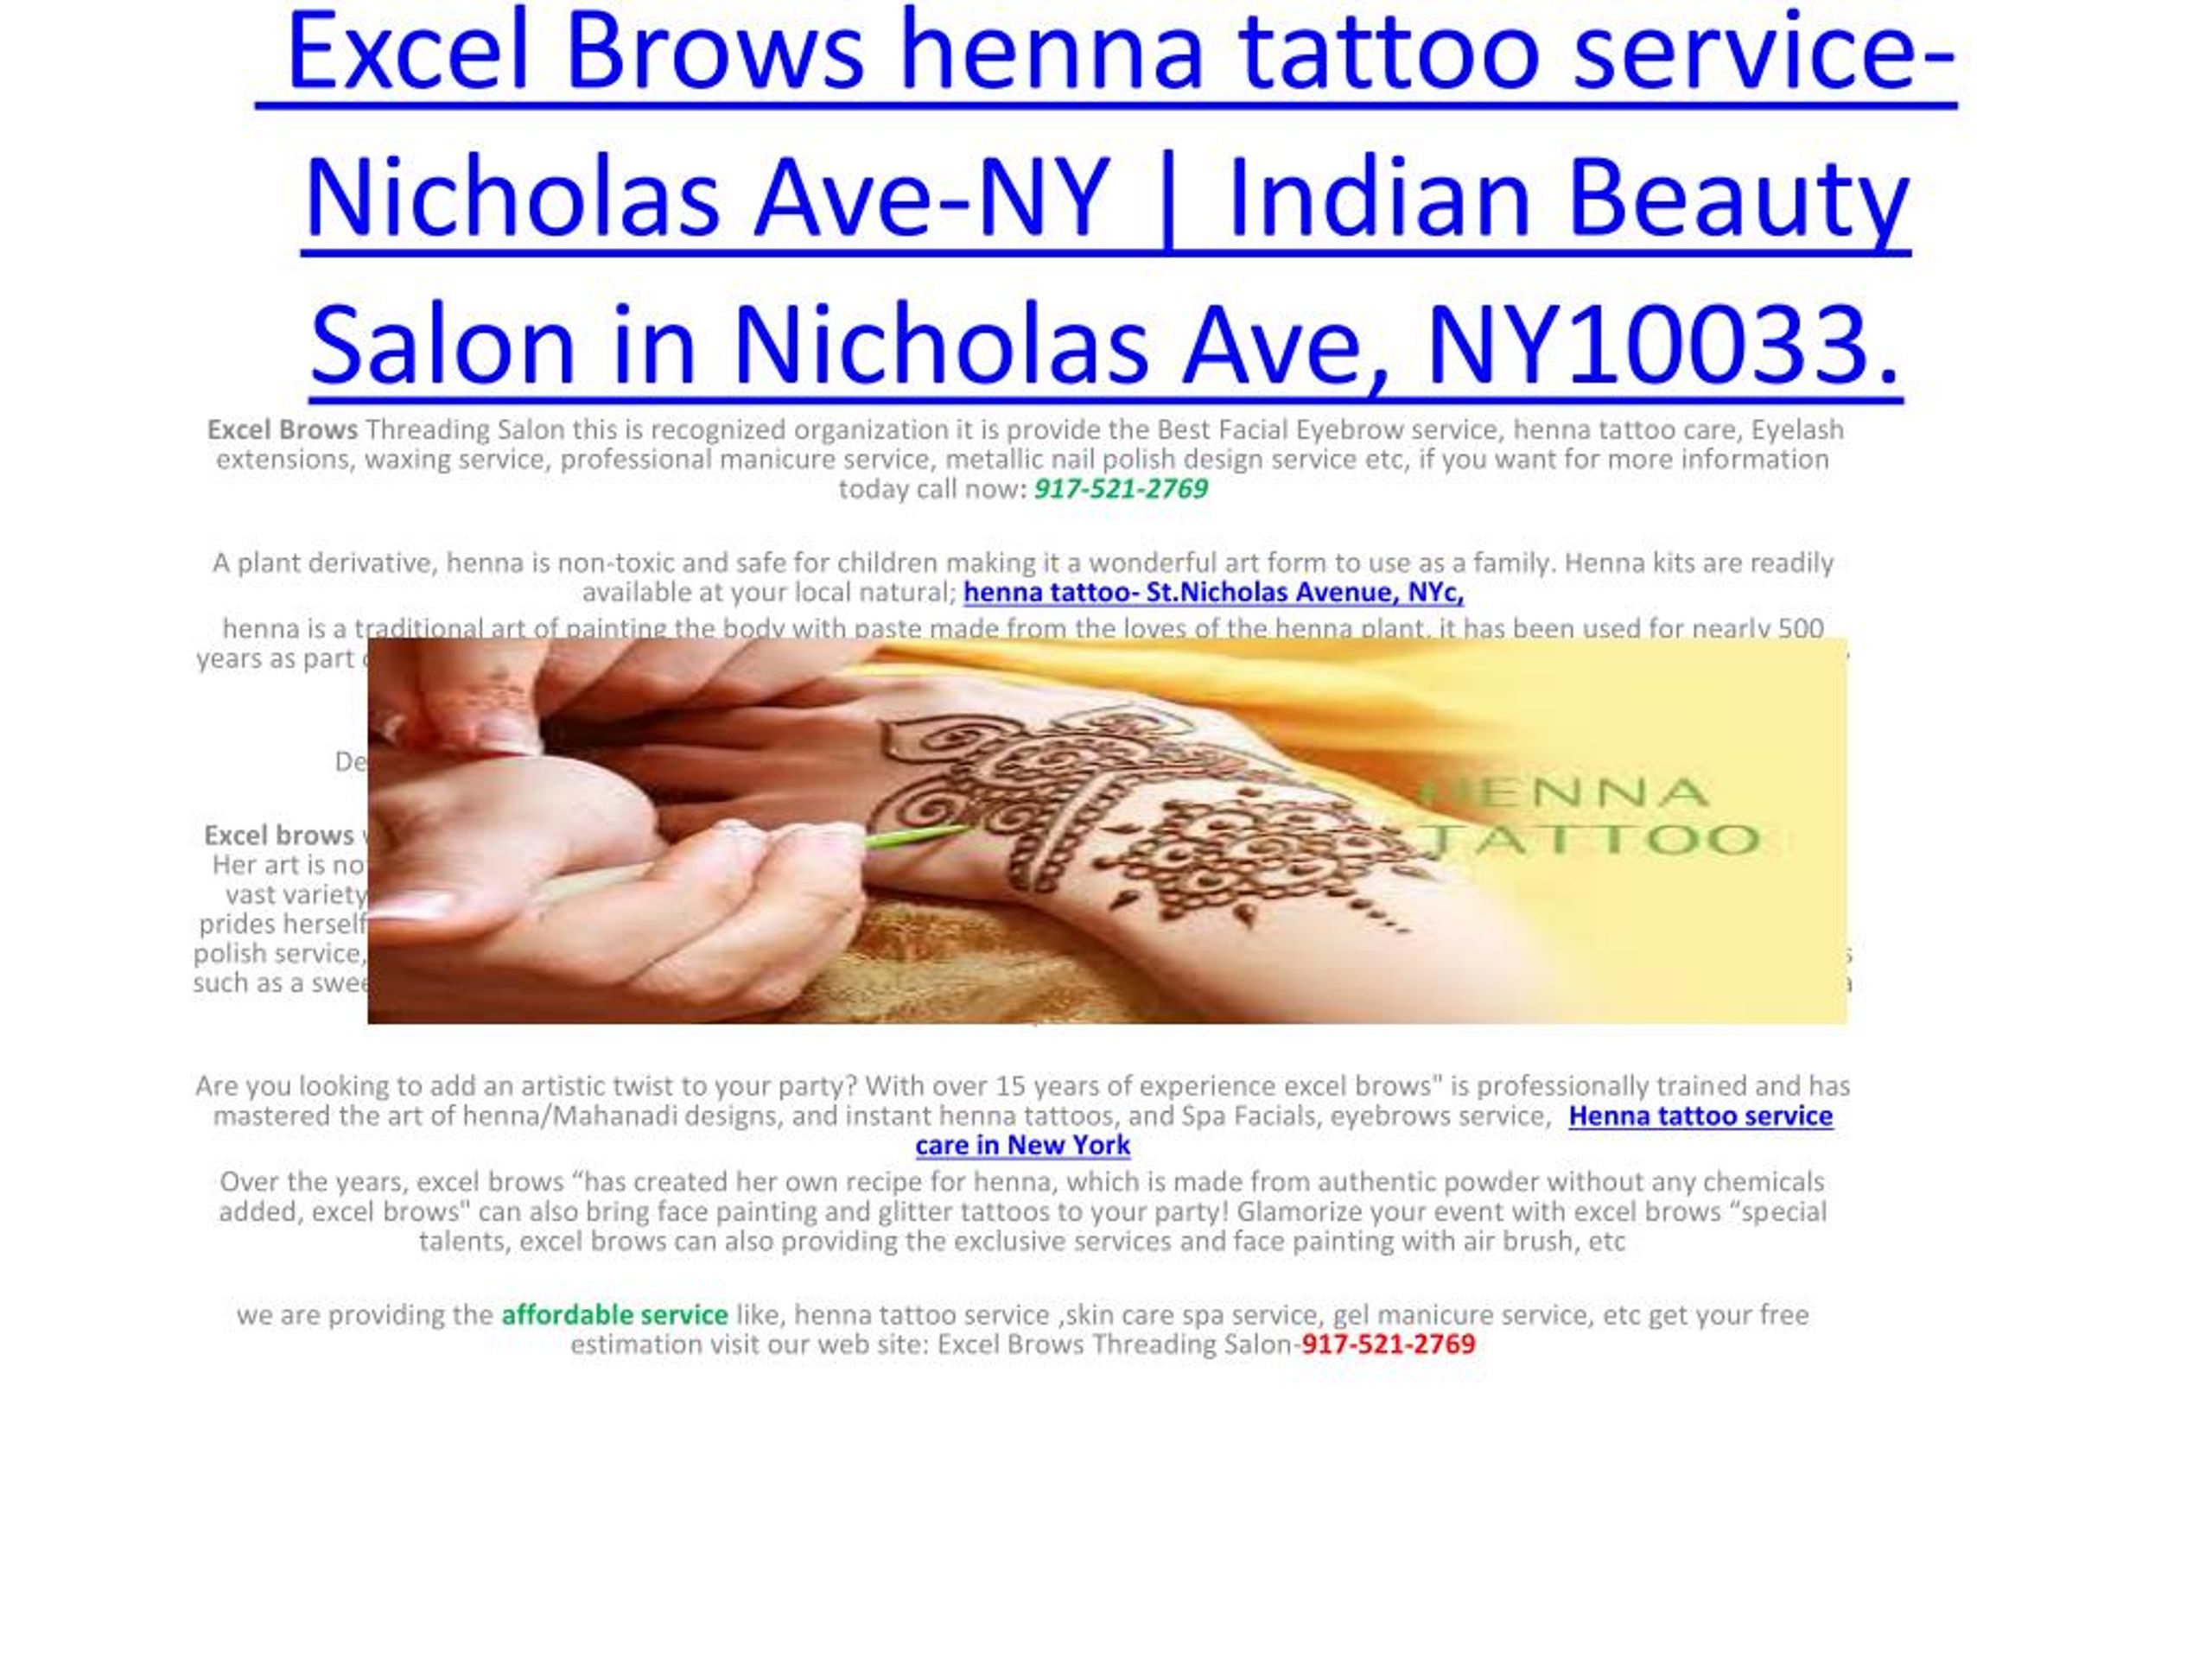 Caring For Henna Body Art - Henna Artist serving Boston MA, Providence RI,  and worldwide